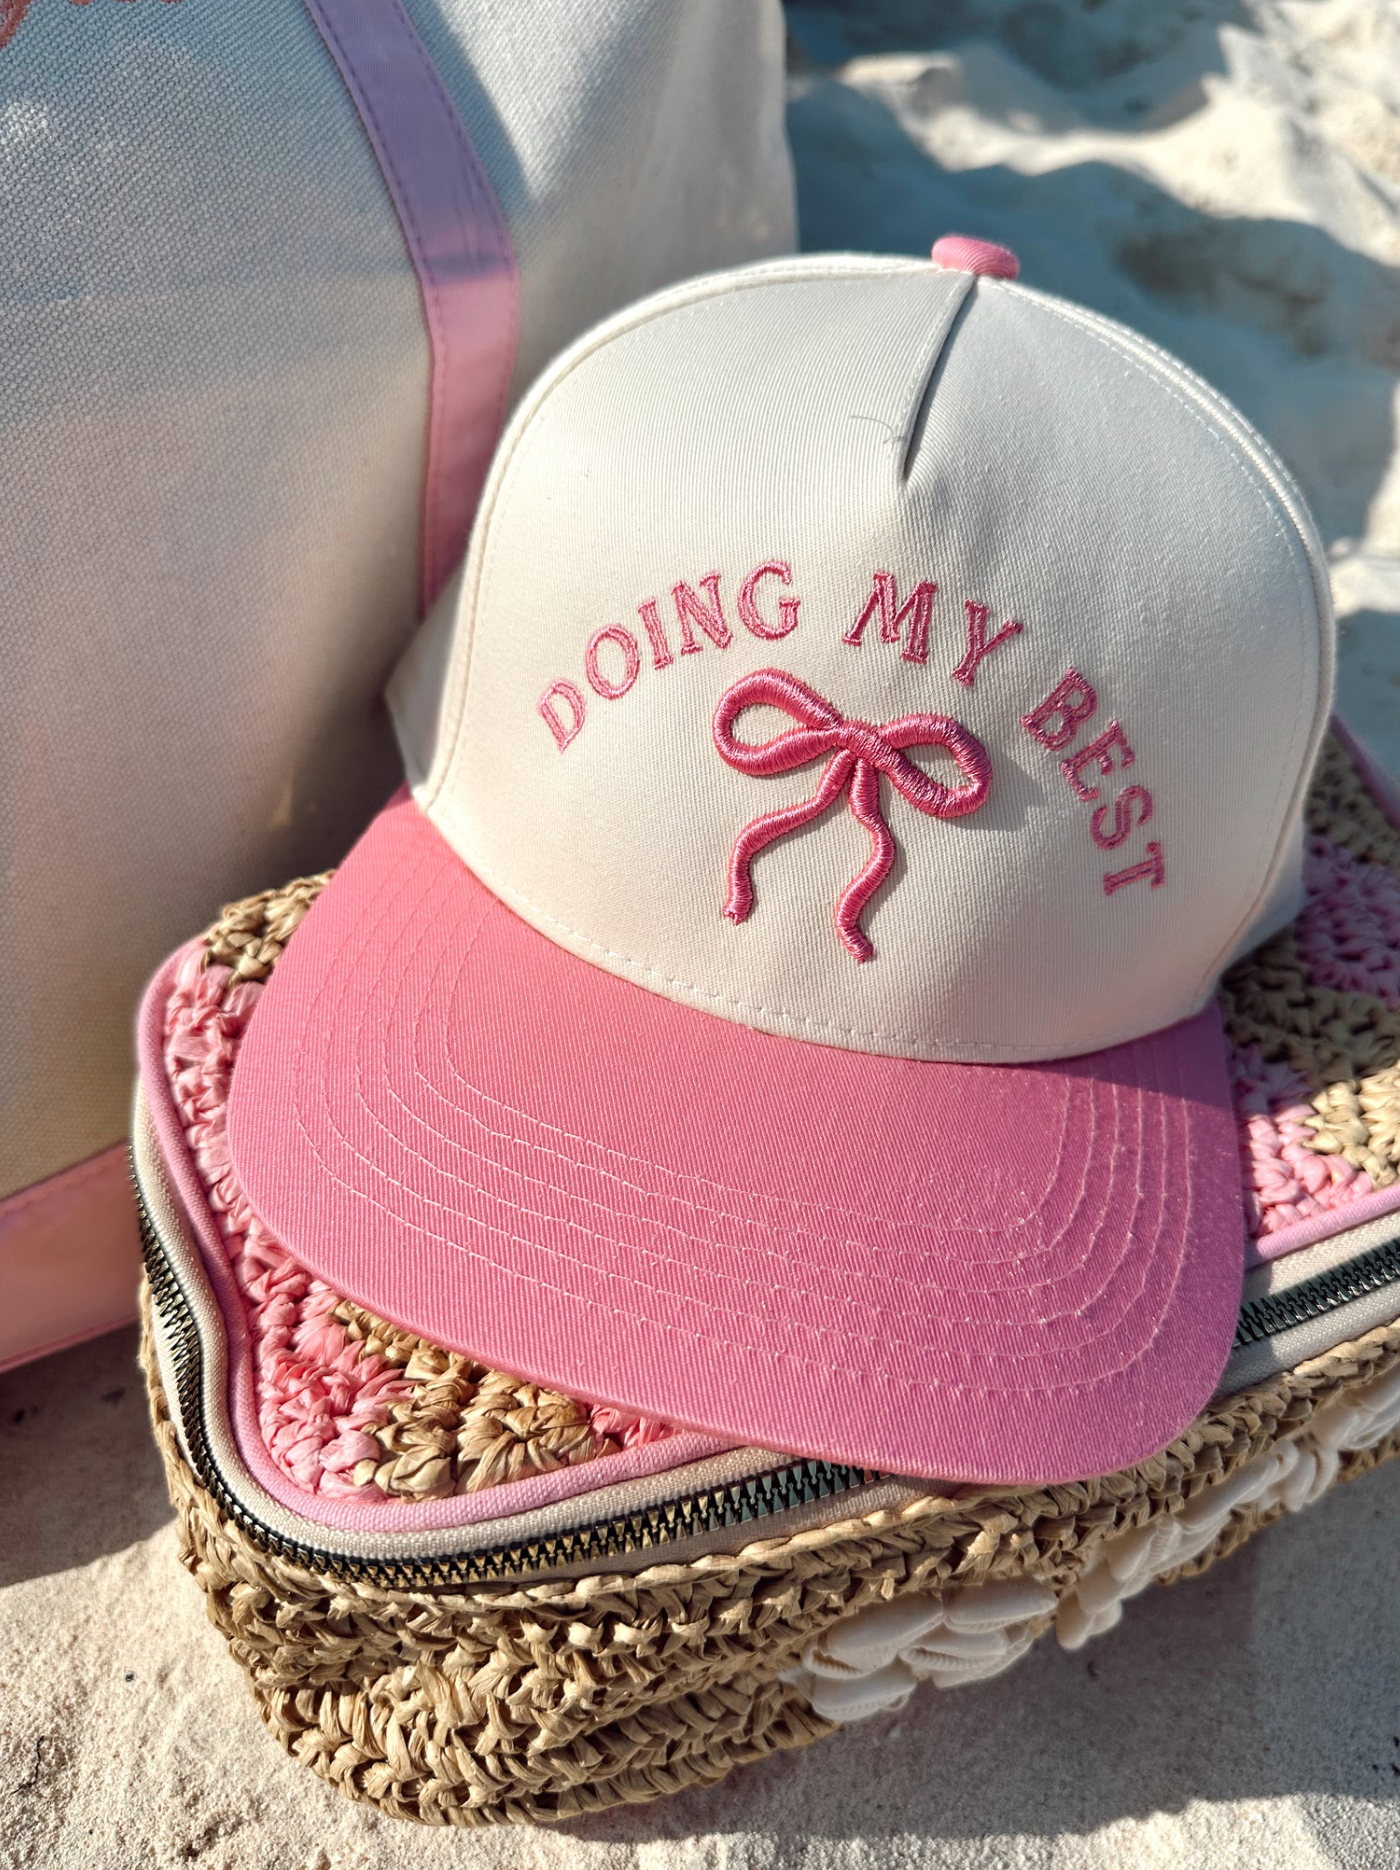 Doing My Best - Pink Vintage Trucker Hat